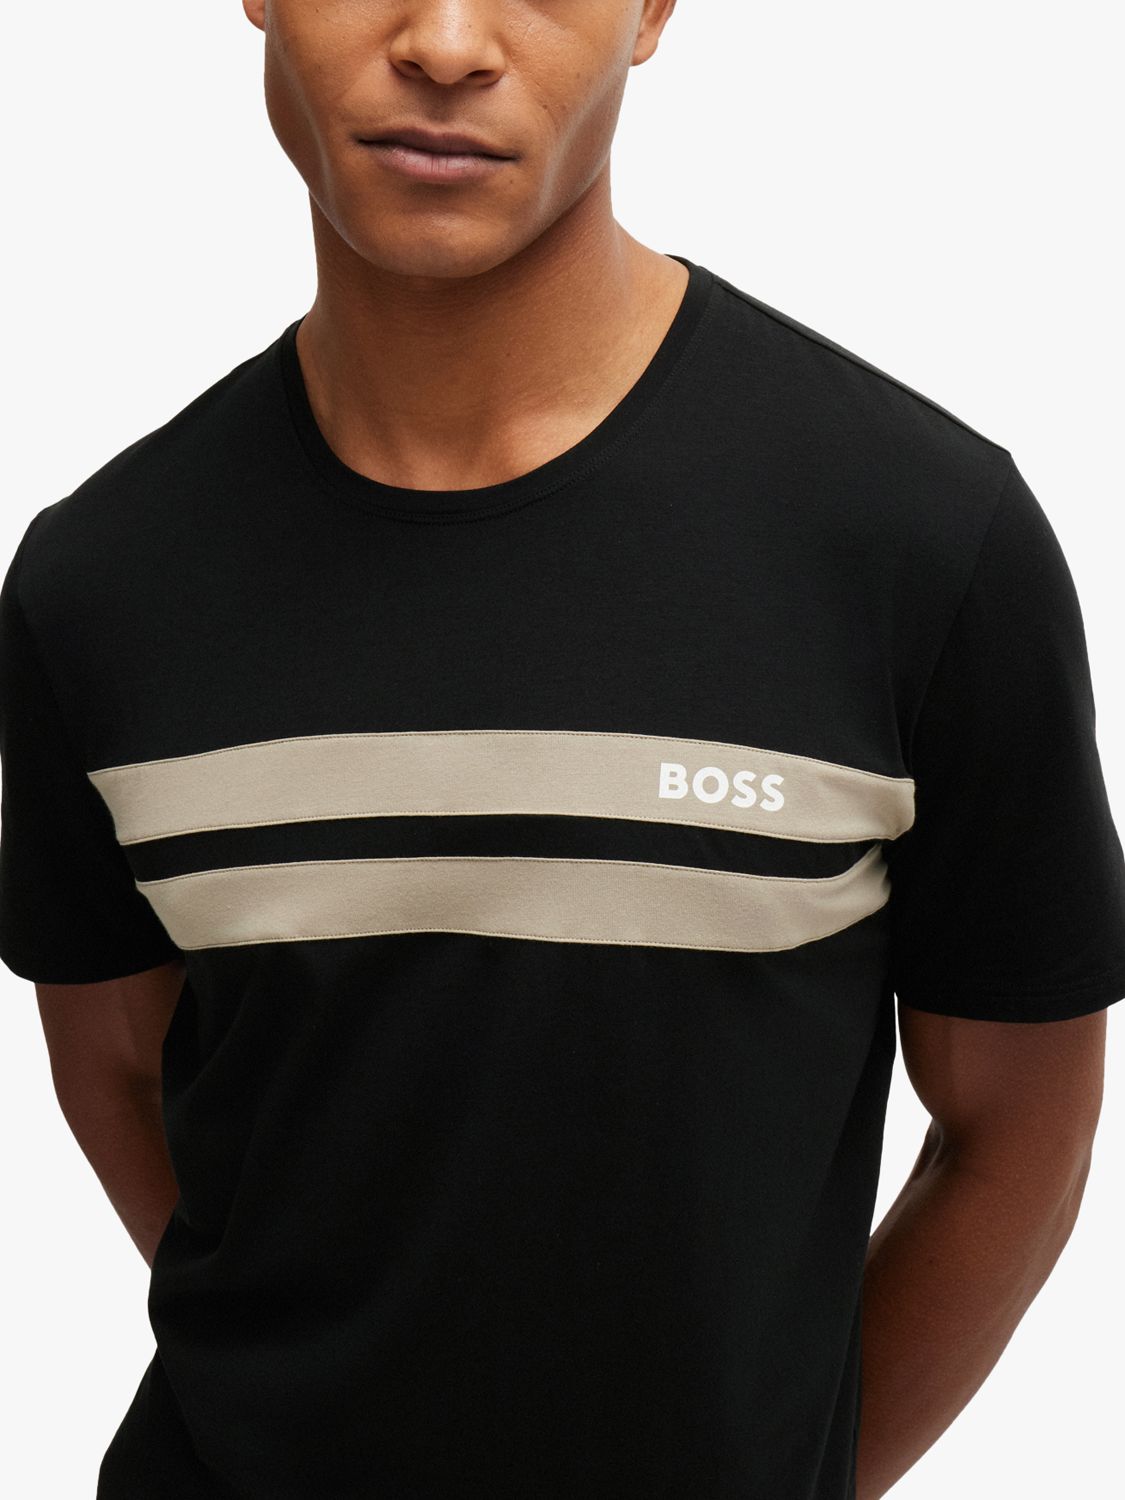 BOSS Balance T-Shirt, Black, S